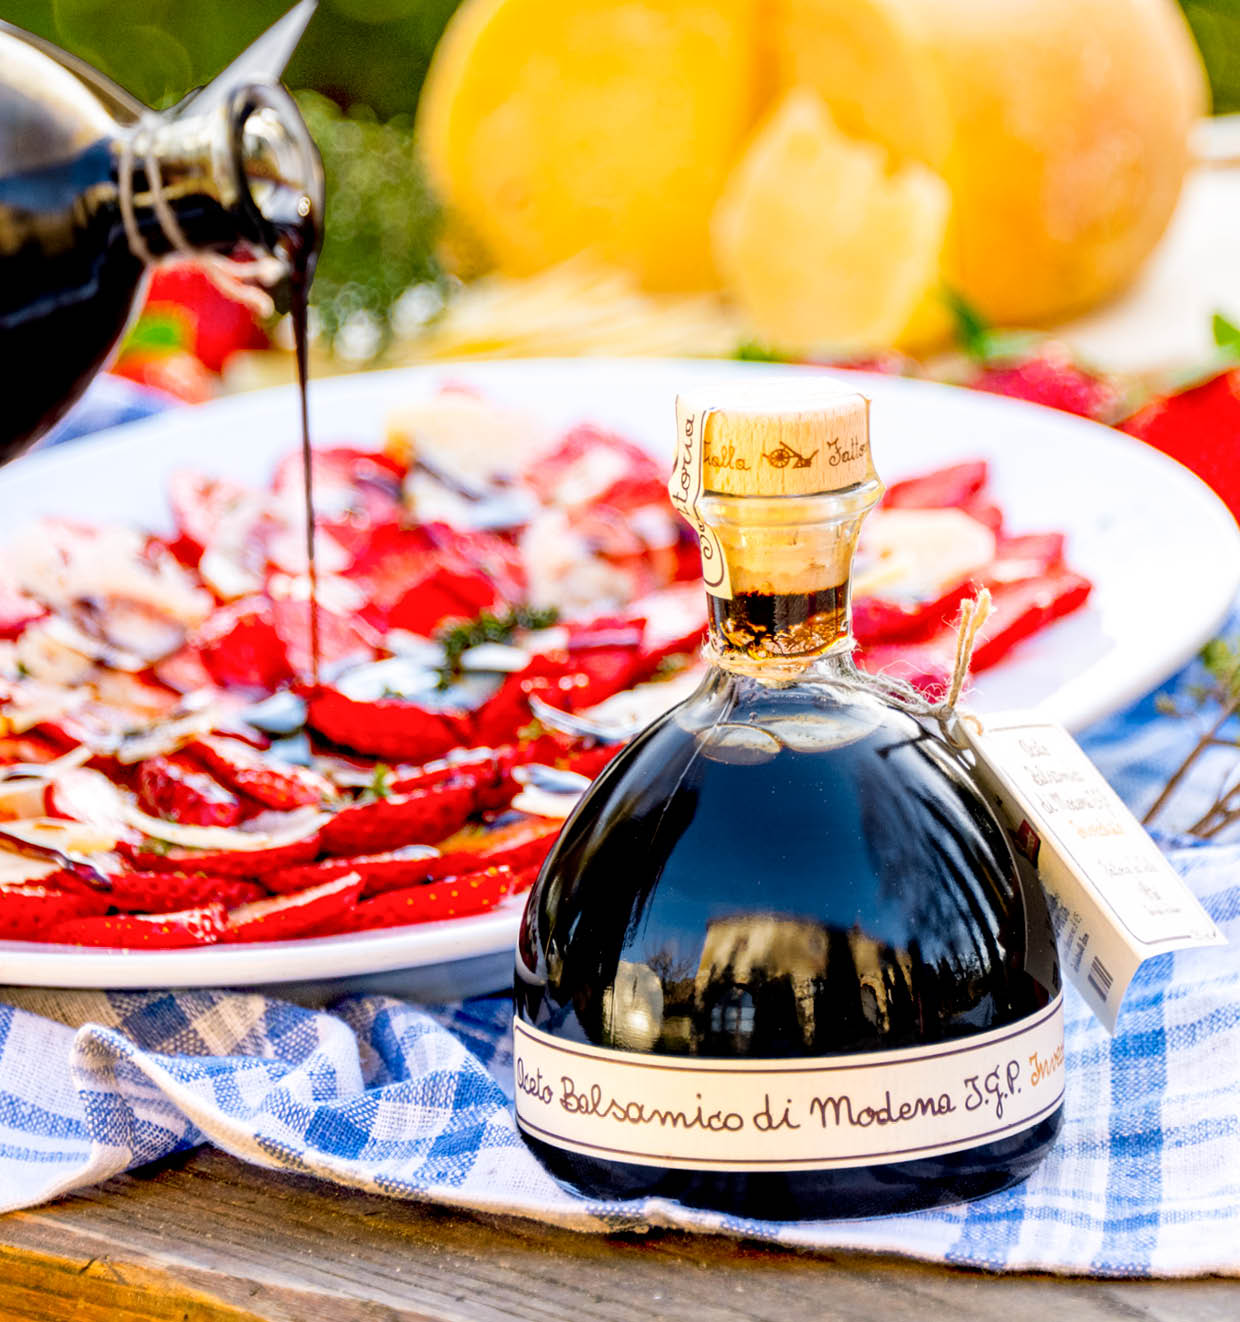 Aged Balsamic Vinegar of Modena I.G.P.